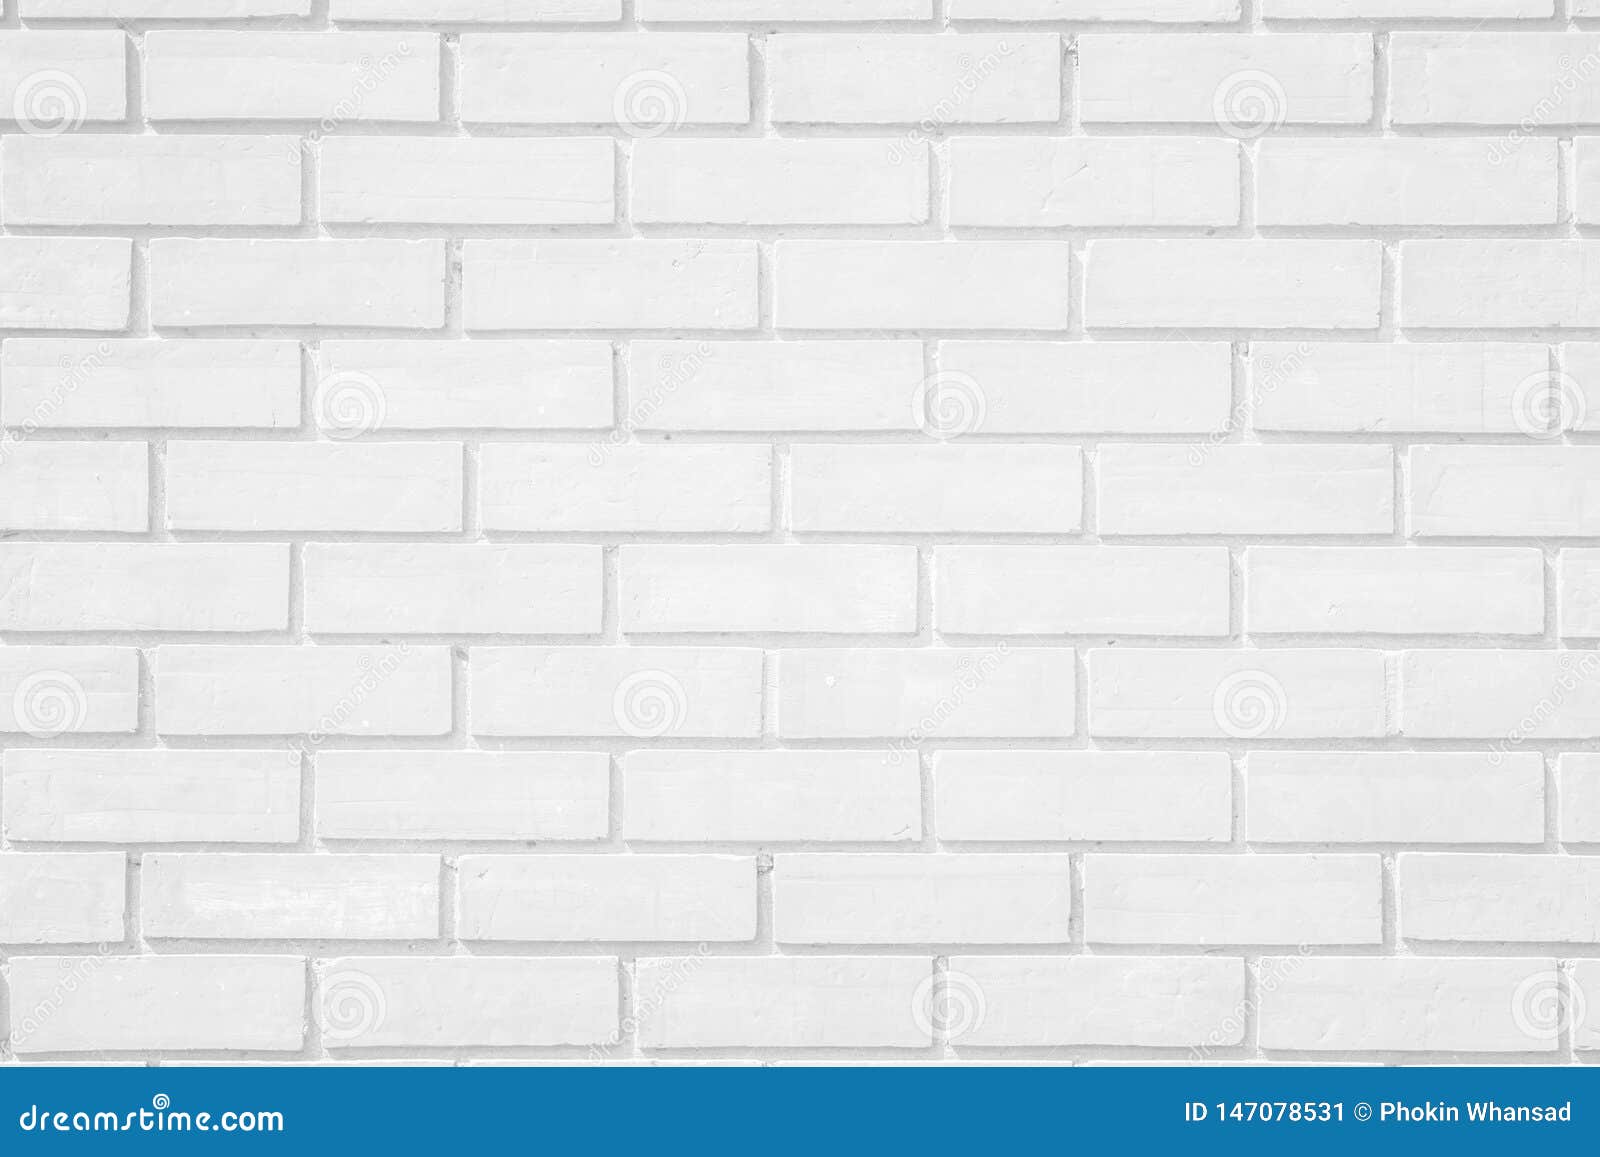 Wall White Brick Wall Texture Background Brickwork Or